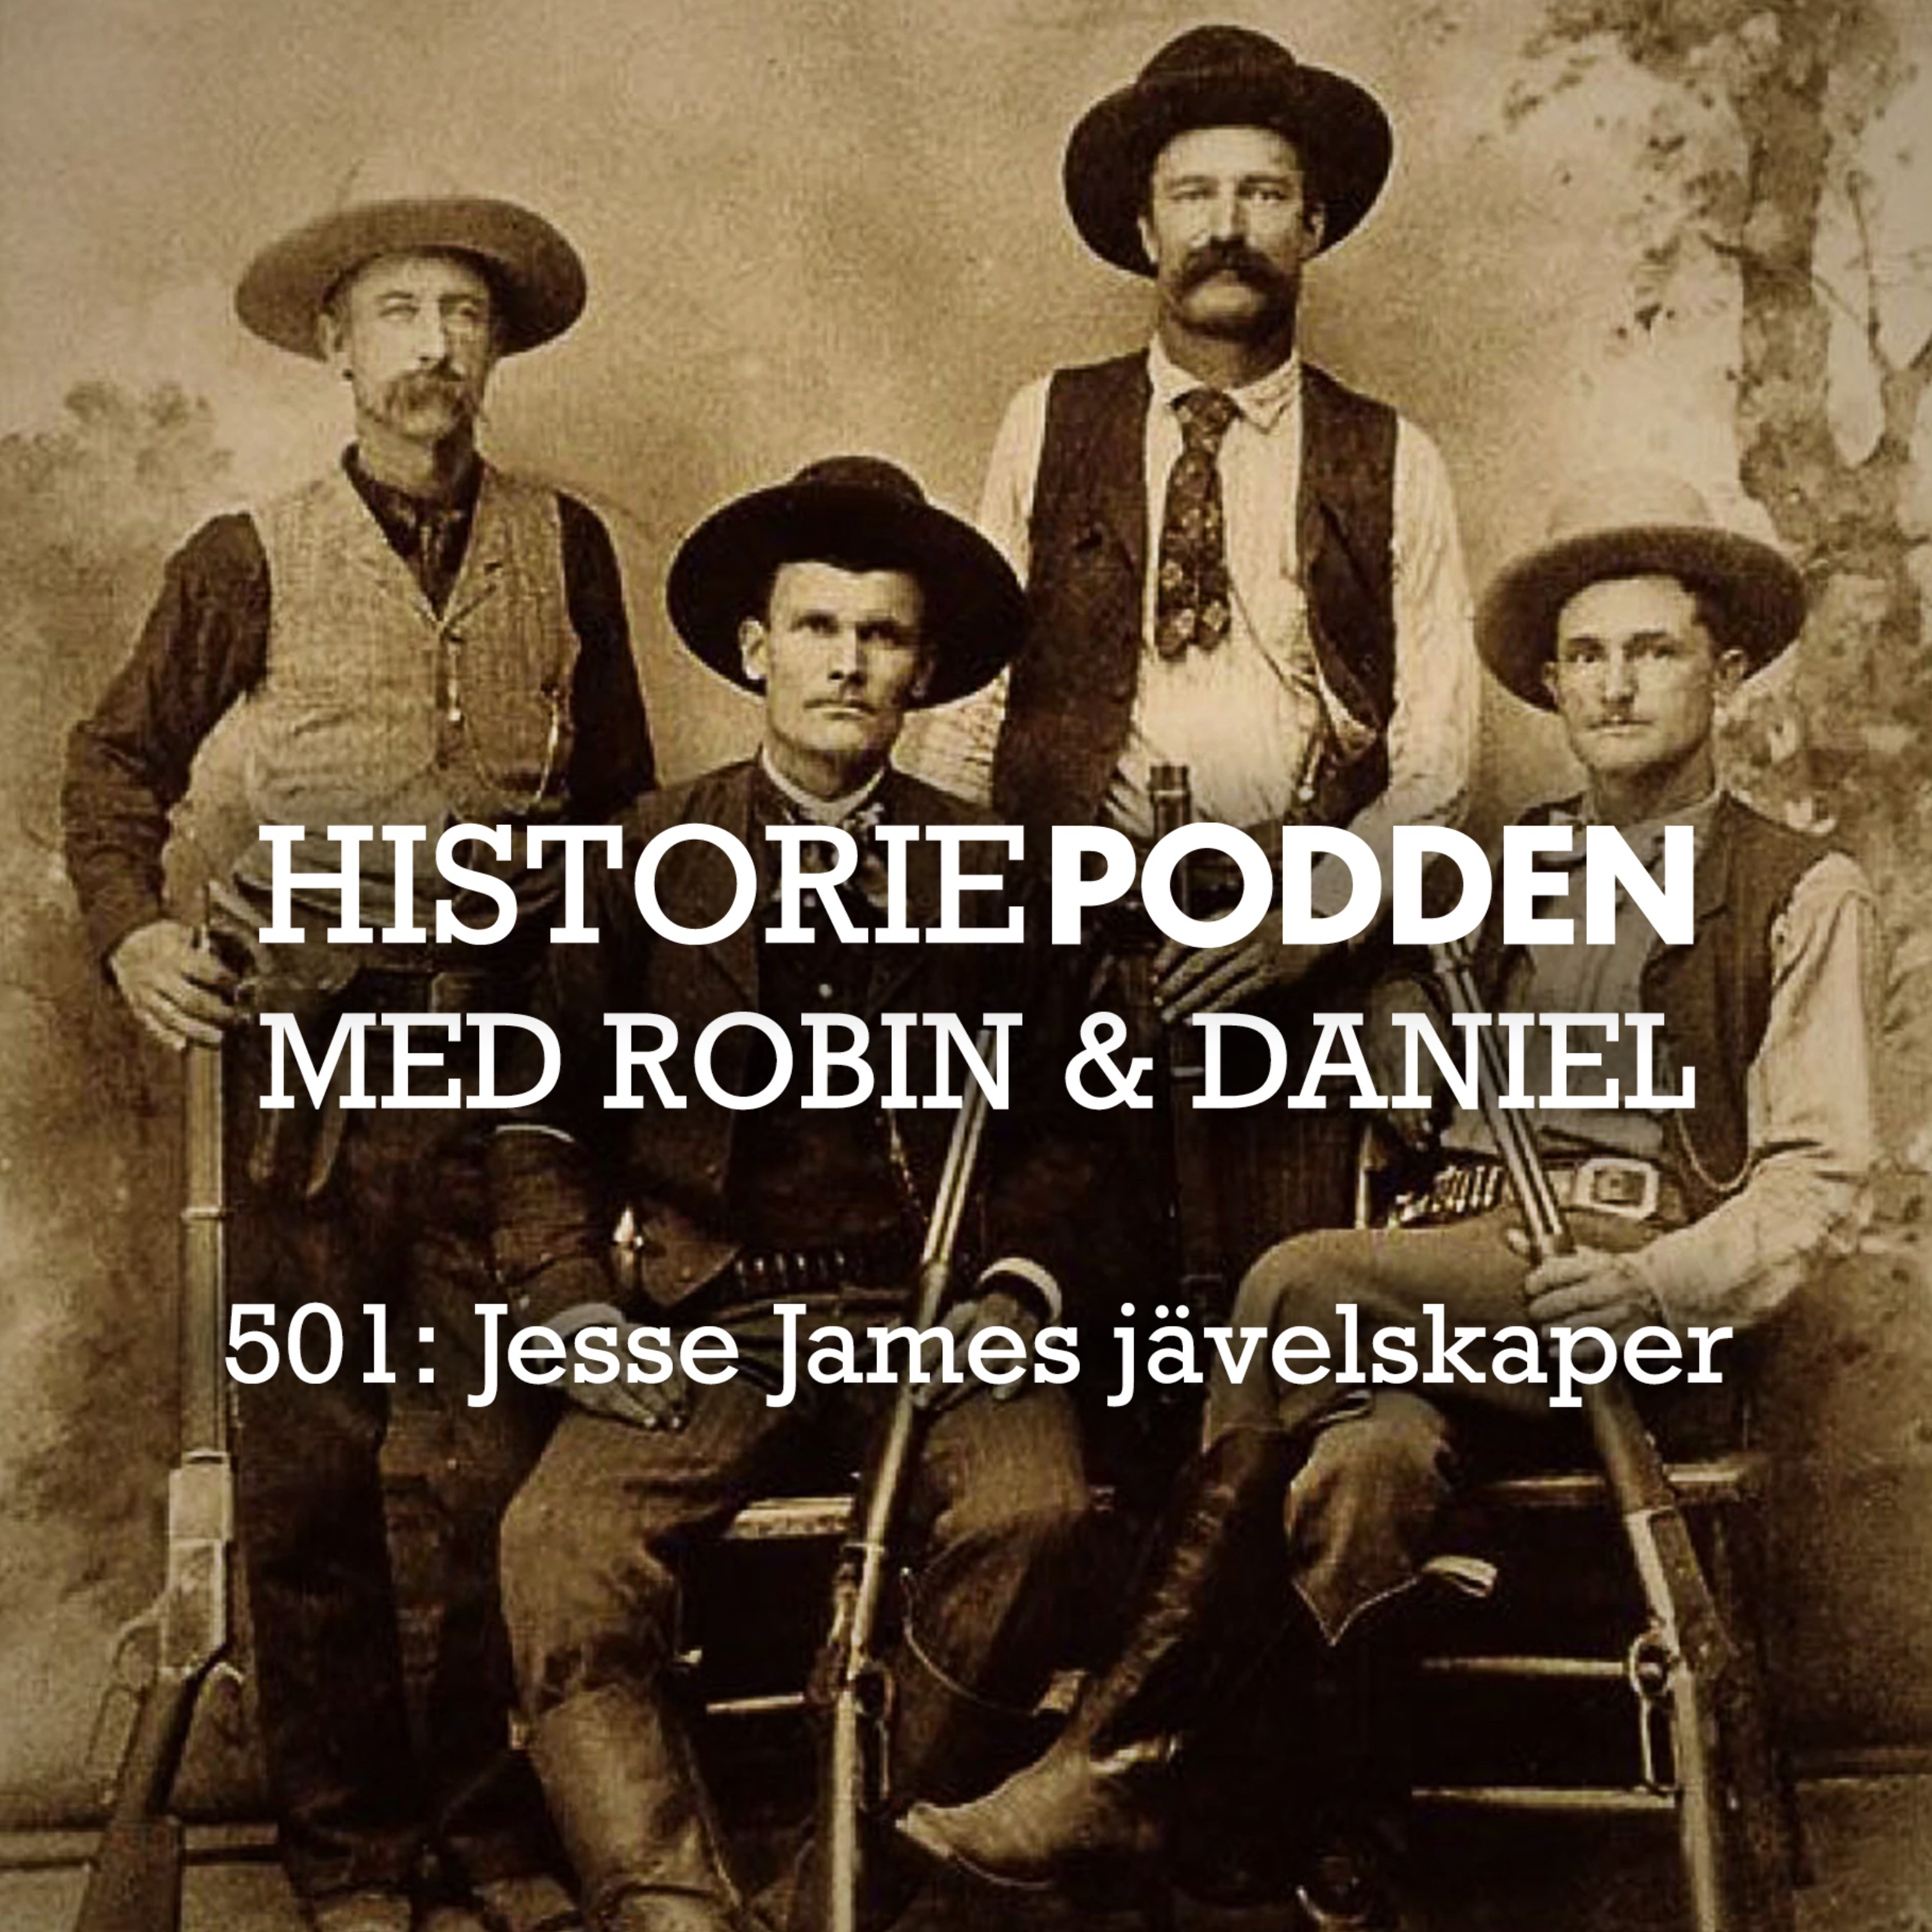 501. Jesse James jävelskaper